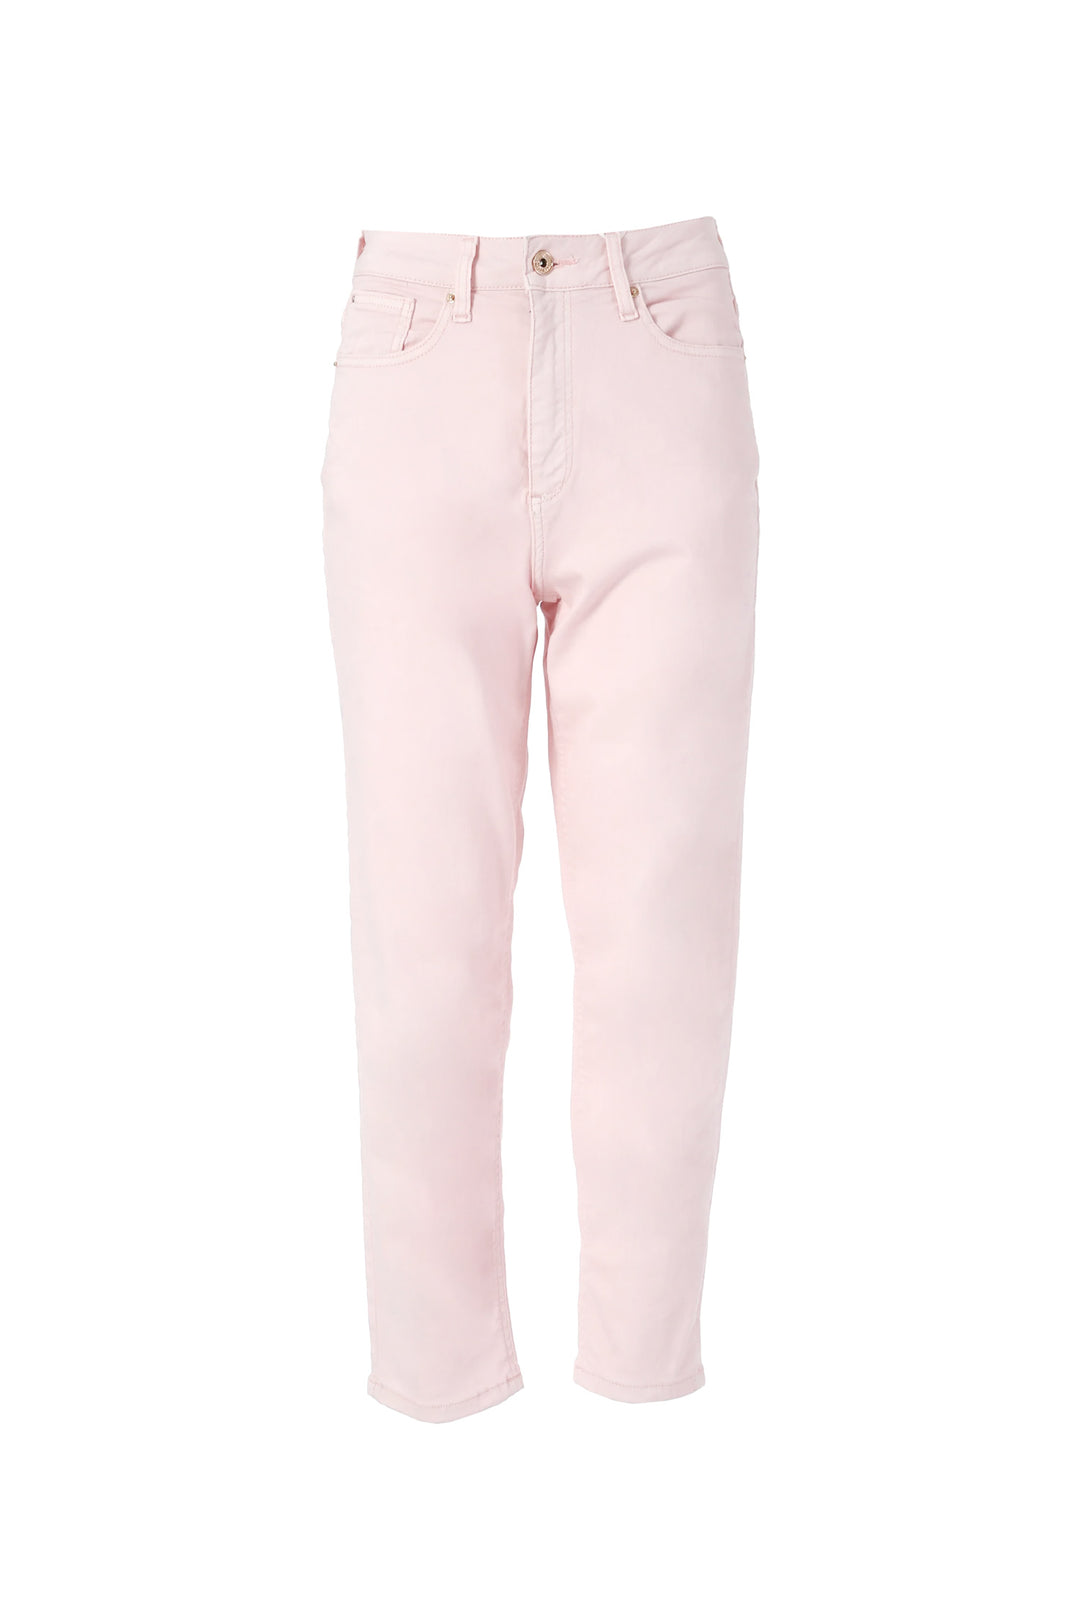 FRACOMINA Jeans cropped in denim rosa - Mancinelli 1954